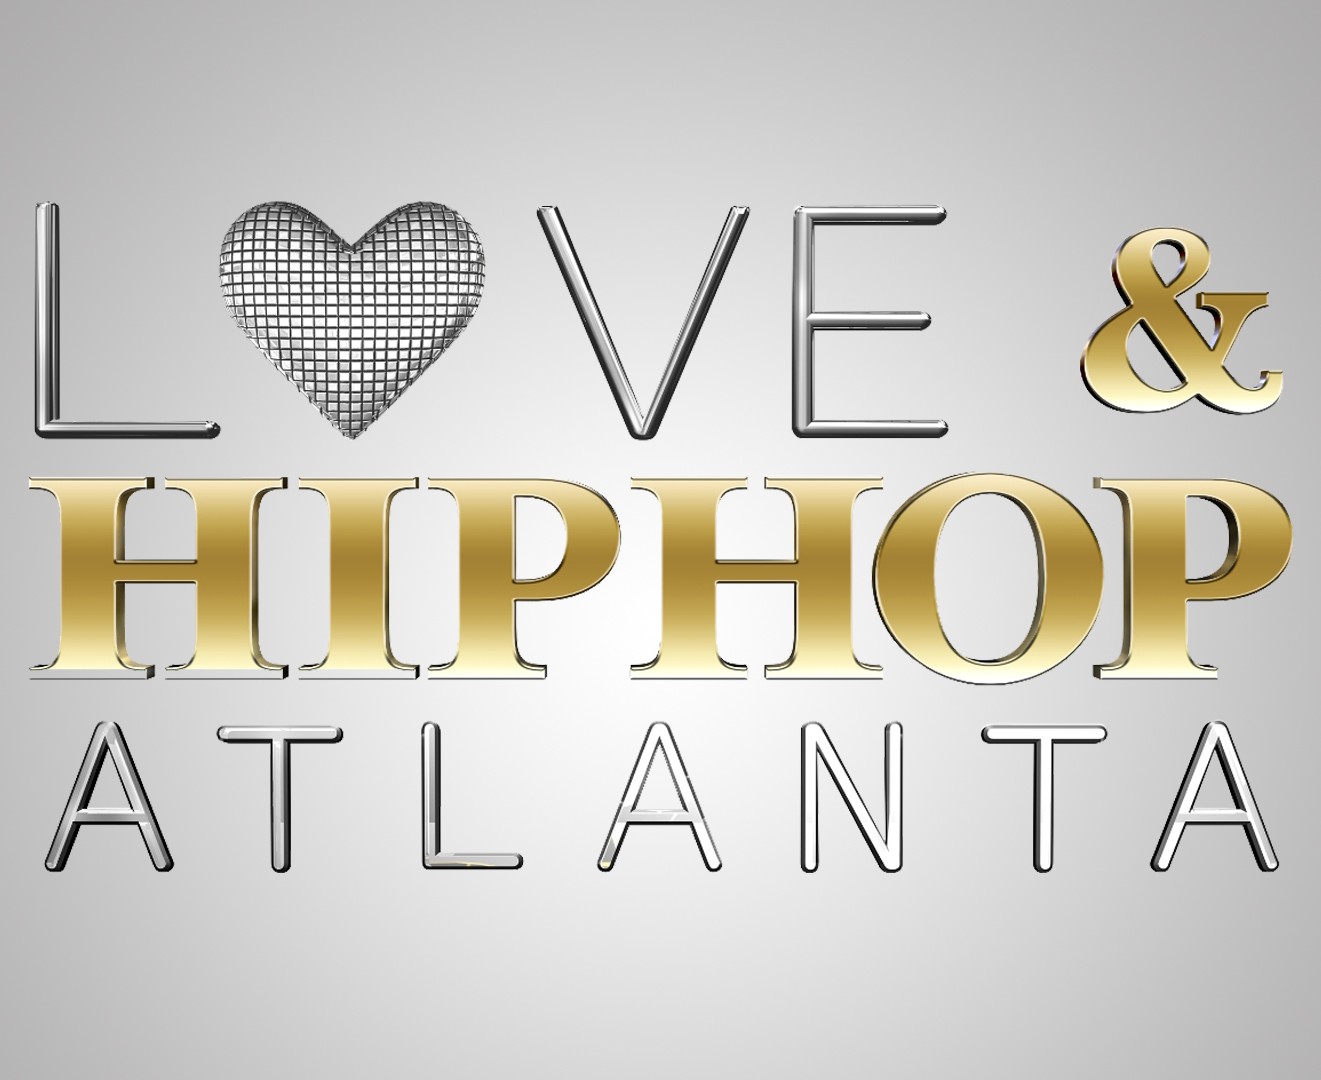 Love & Hip Hop Atlanta Episode #9 “Loyalty Card” [FULL VIDEO]1321 x 1080